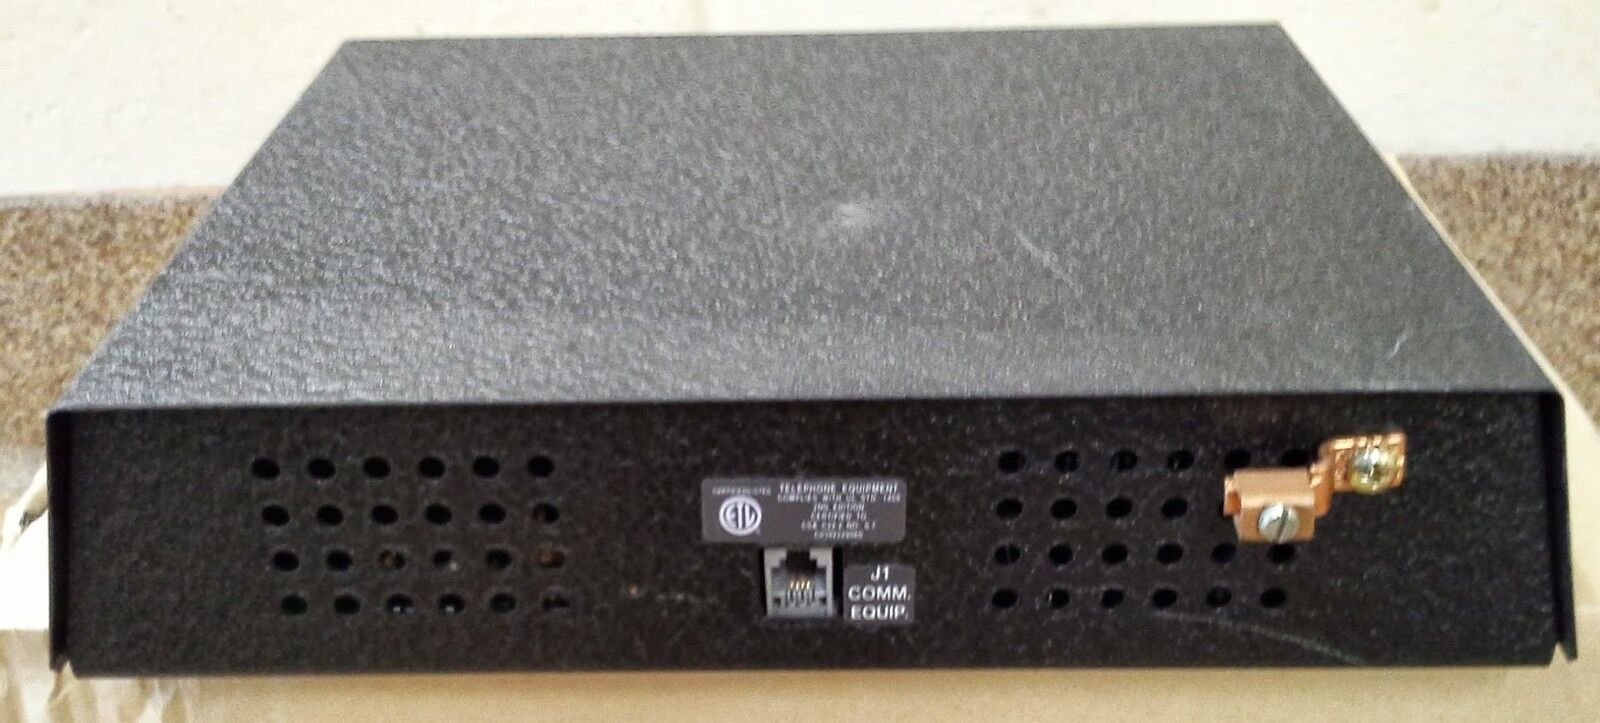 Comdial ATI-D   2 Port Analog Adapter